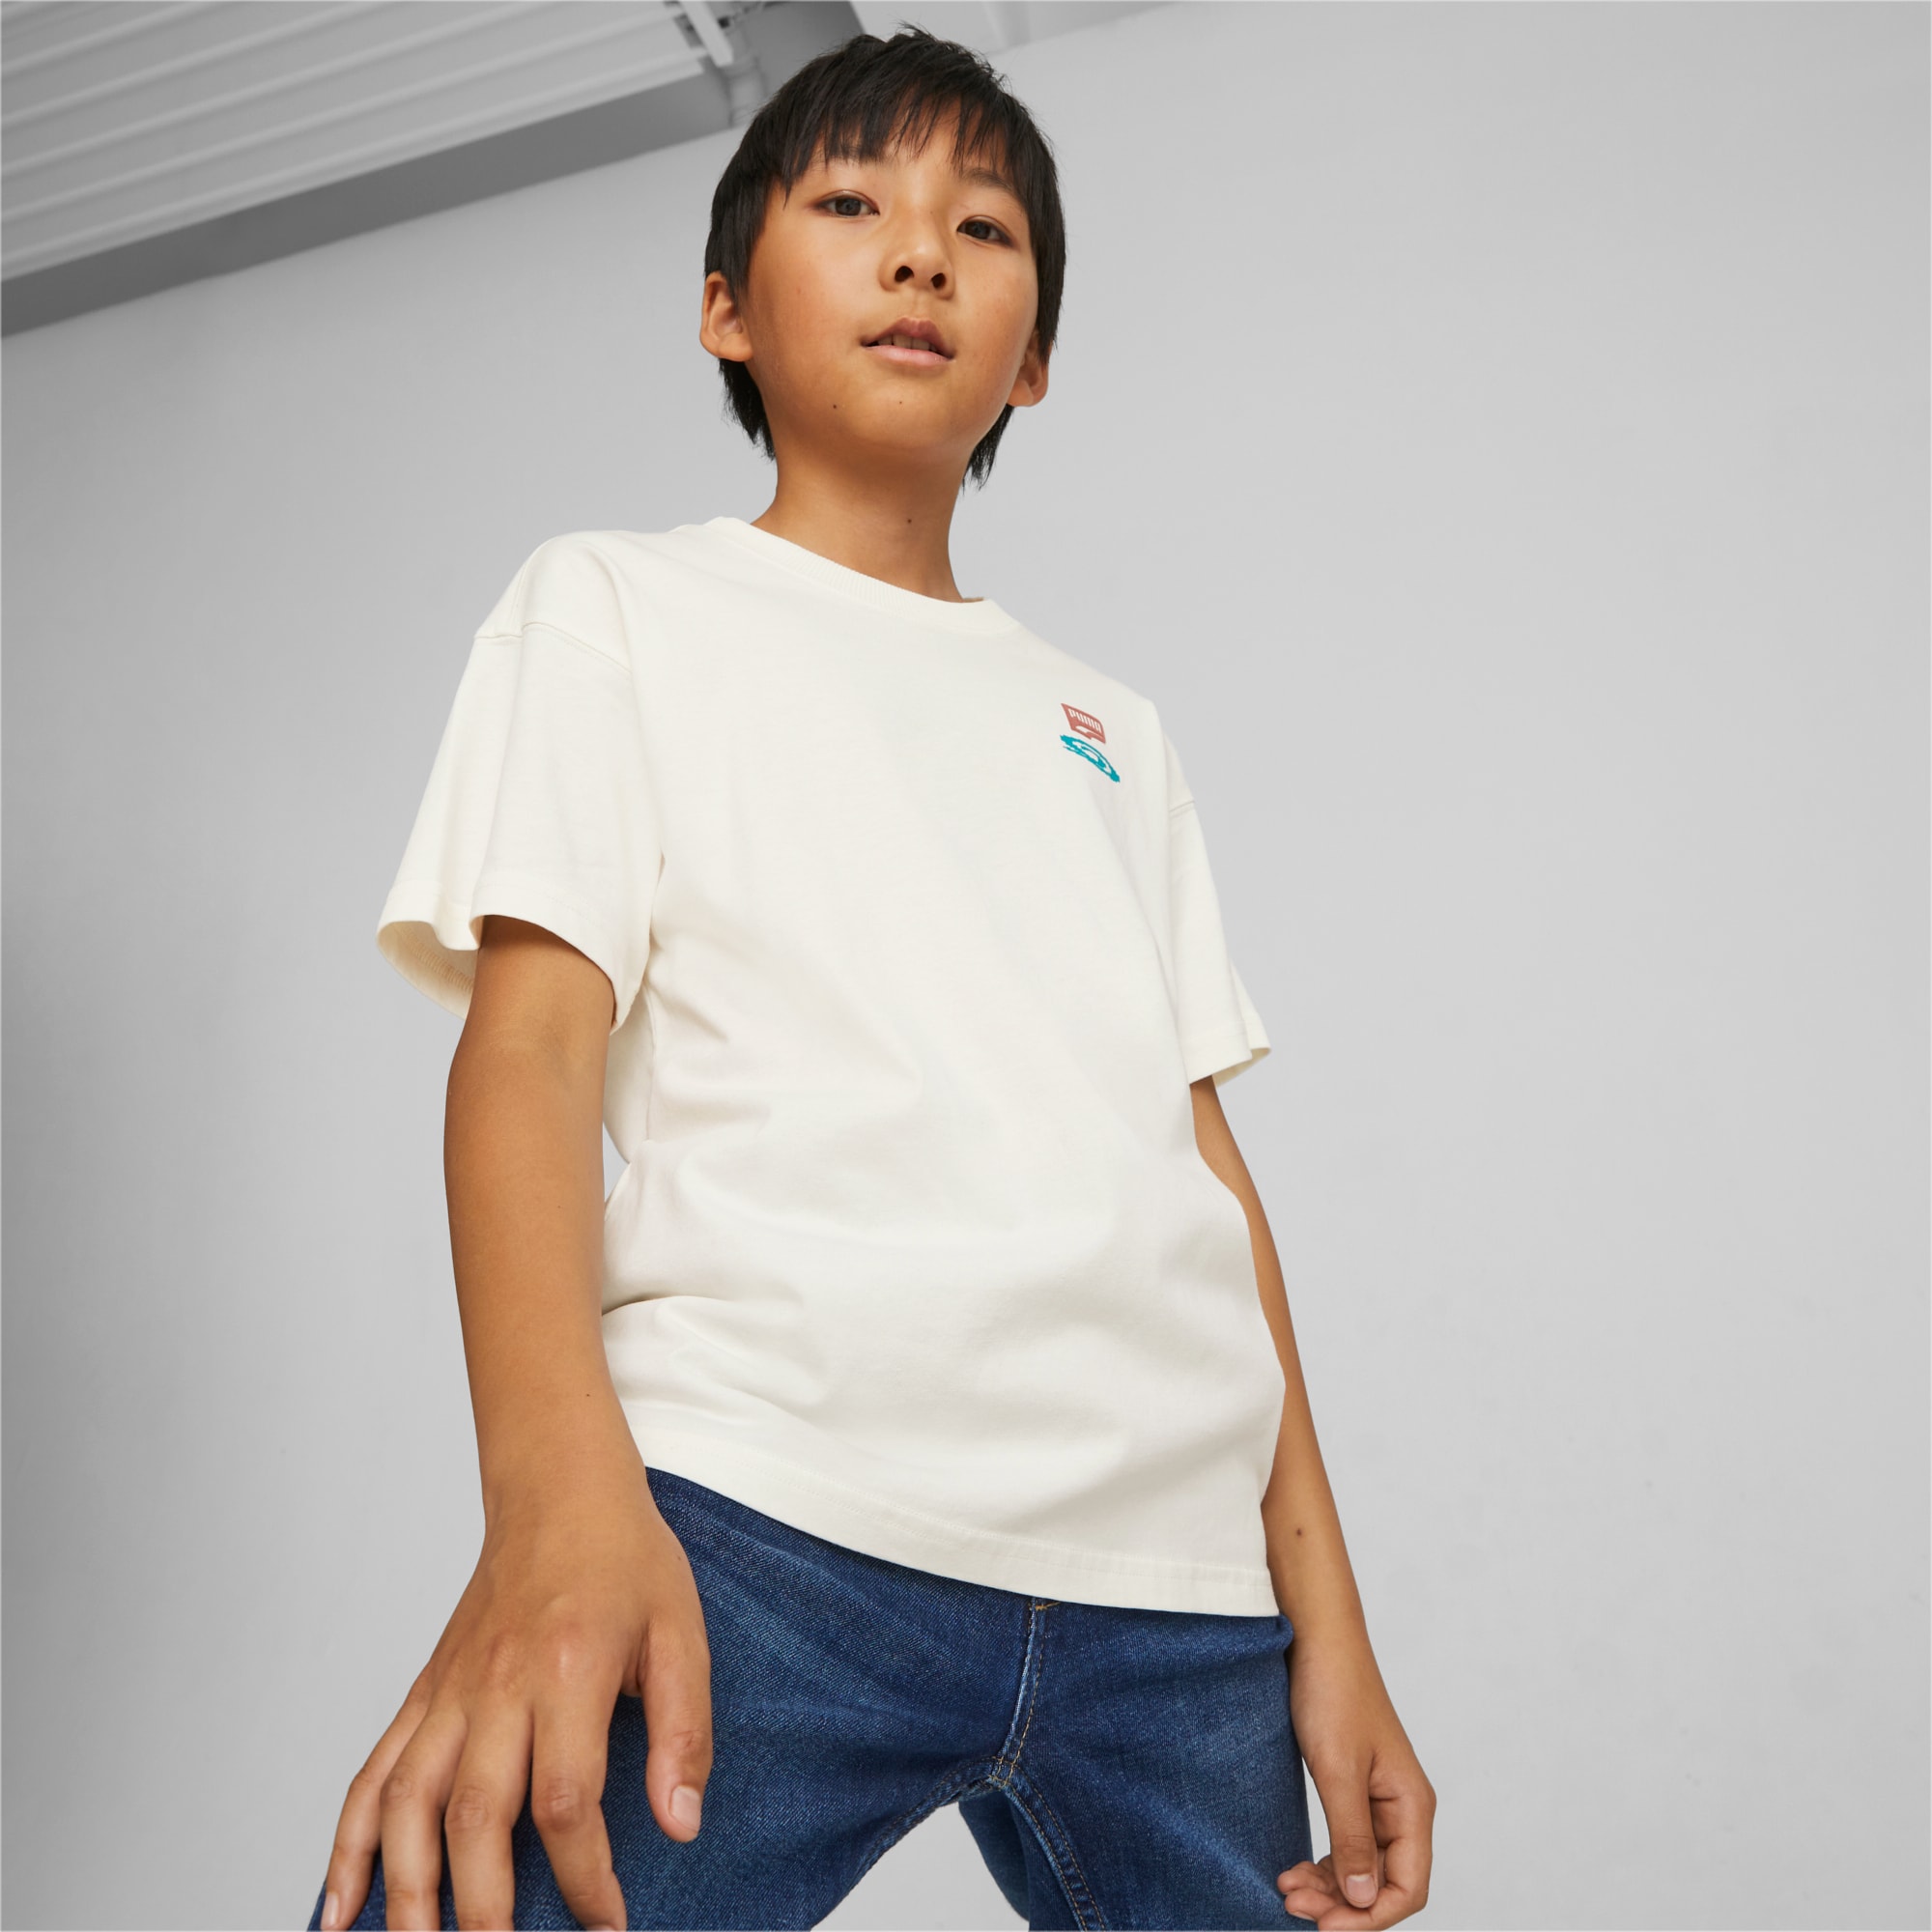 Camiseta Estampada Niño Summer Blanco - Varias Tallas - 929461